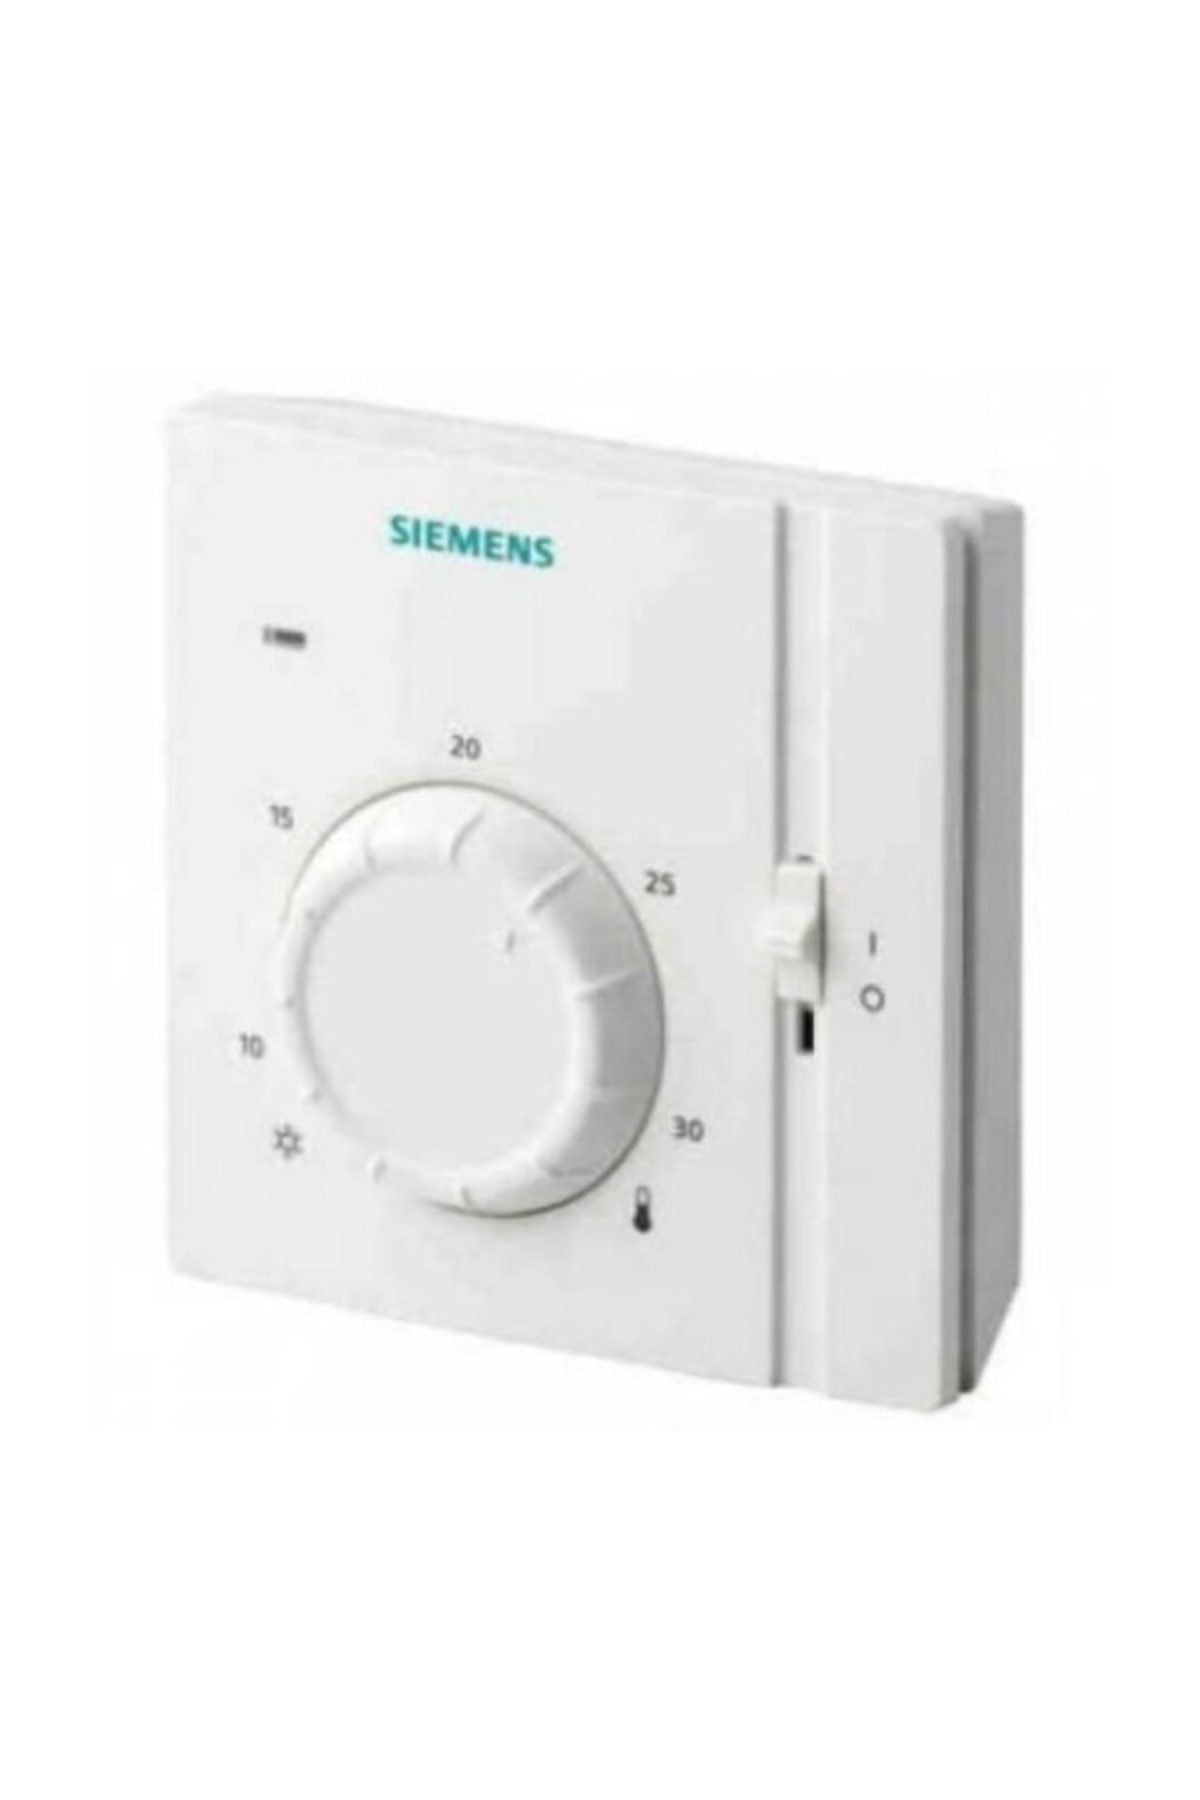 Siemens Raa31.16 Lambalı On-of Kablolu Oda Termostatı